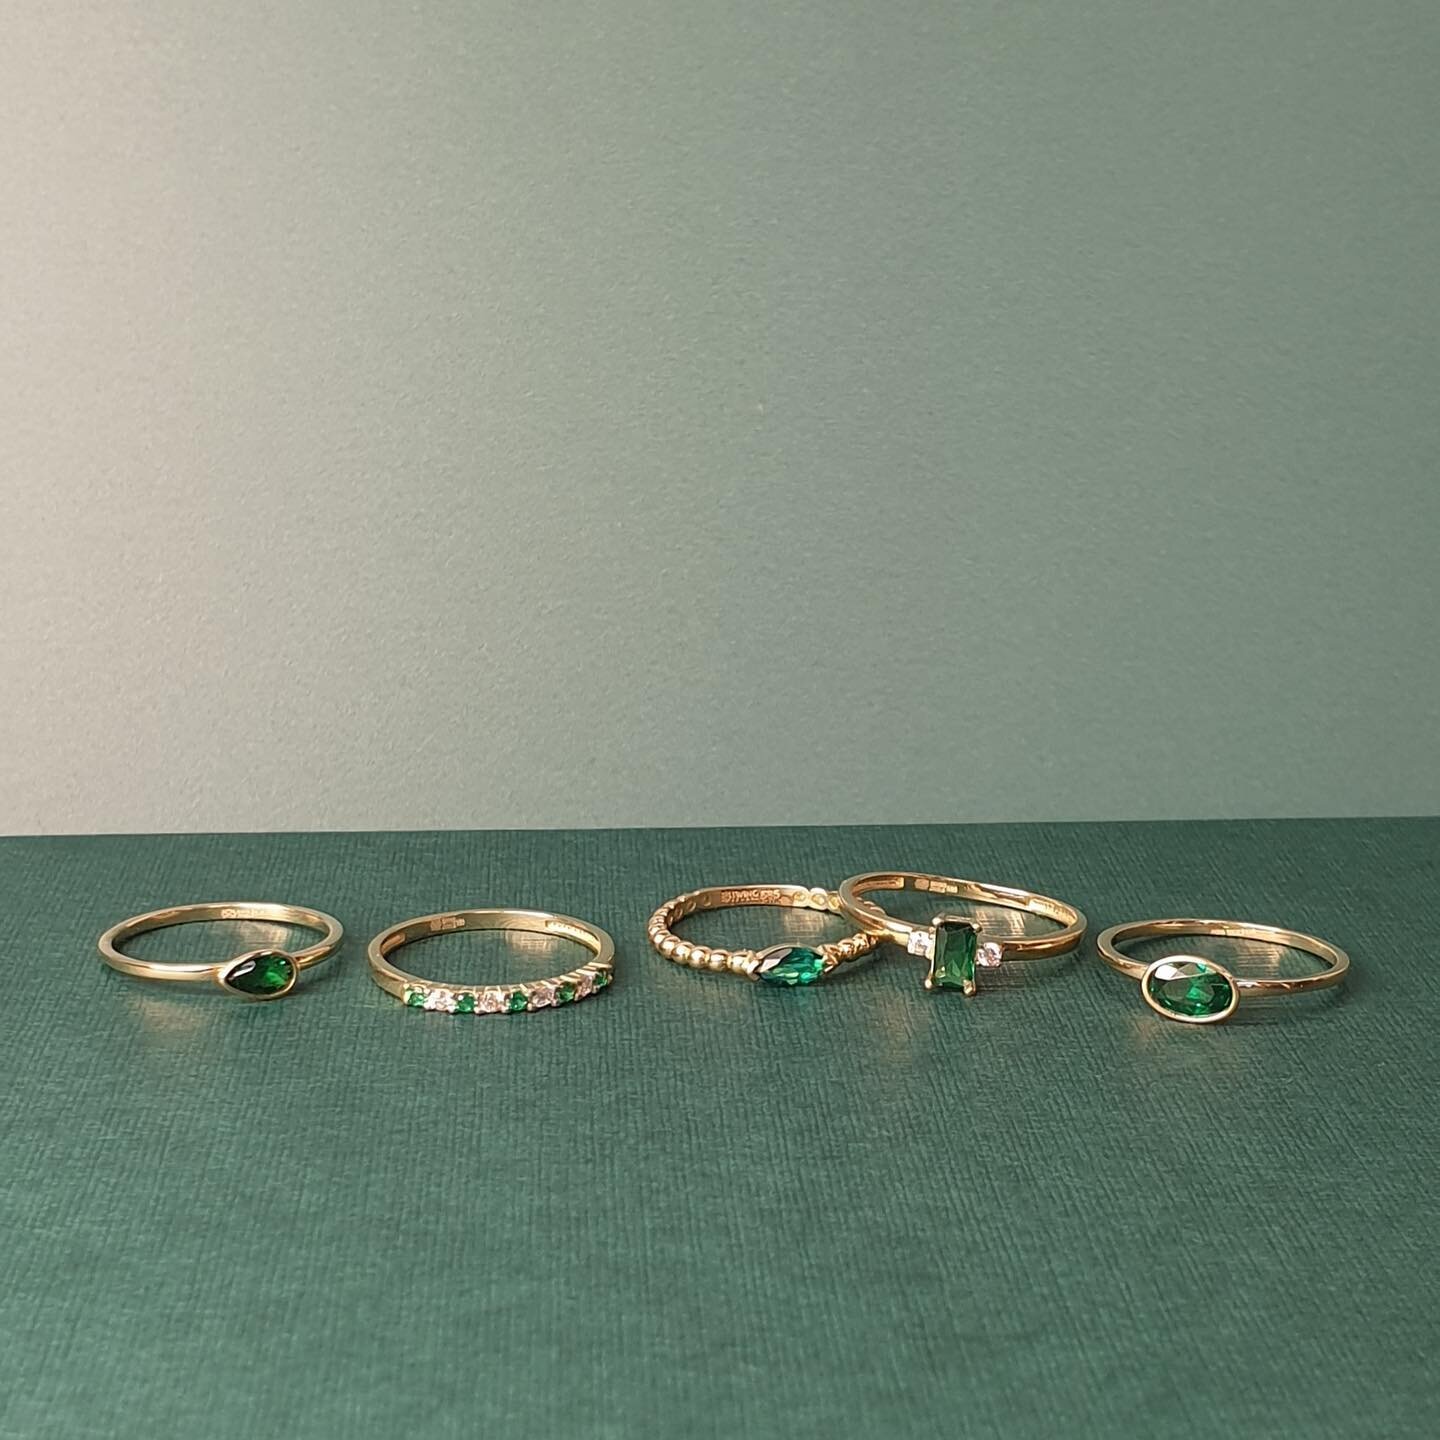 Different shades of green 💚

#swingjewels #goldjewellery #stackingring #14kgold #18kgold #stacks #juwelier #bijouterie